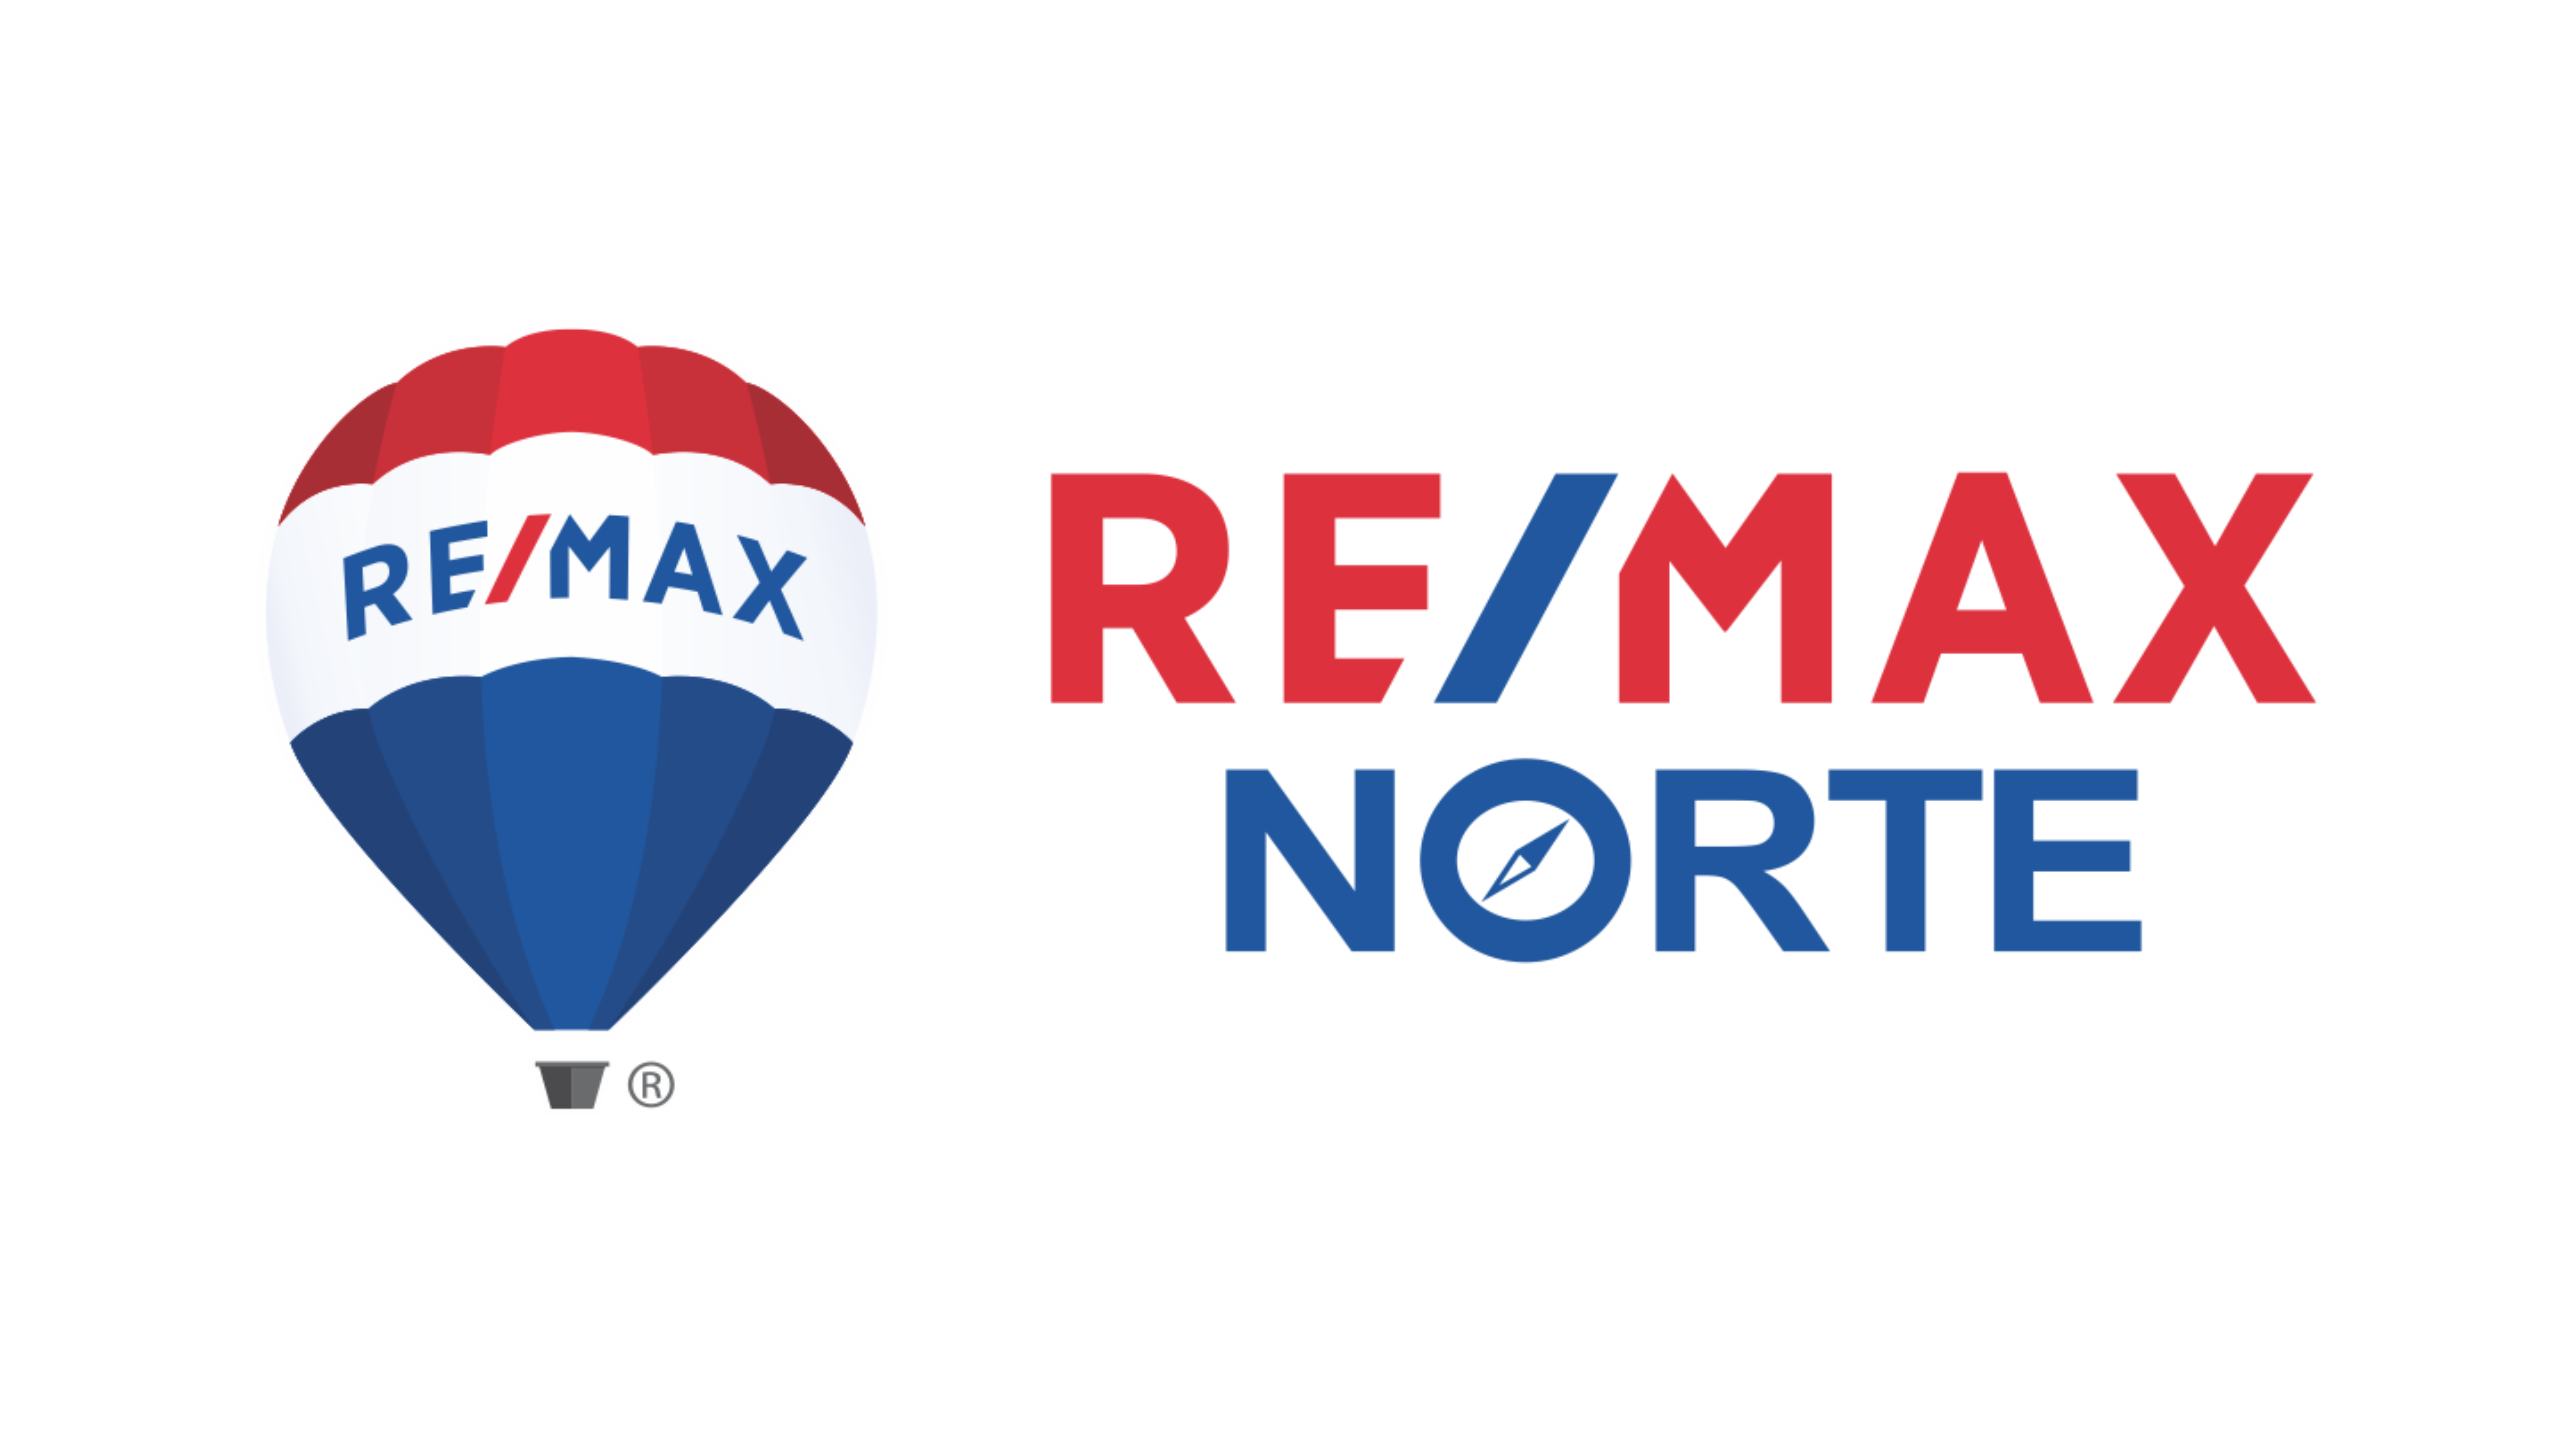 Remax Norte